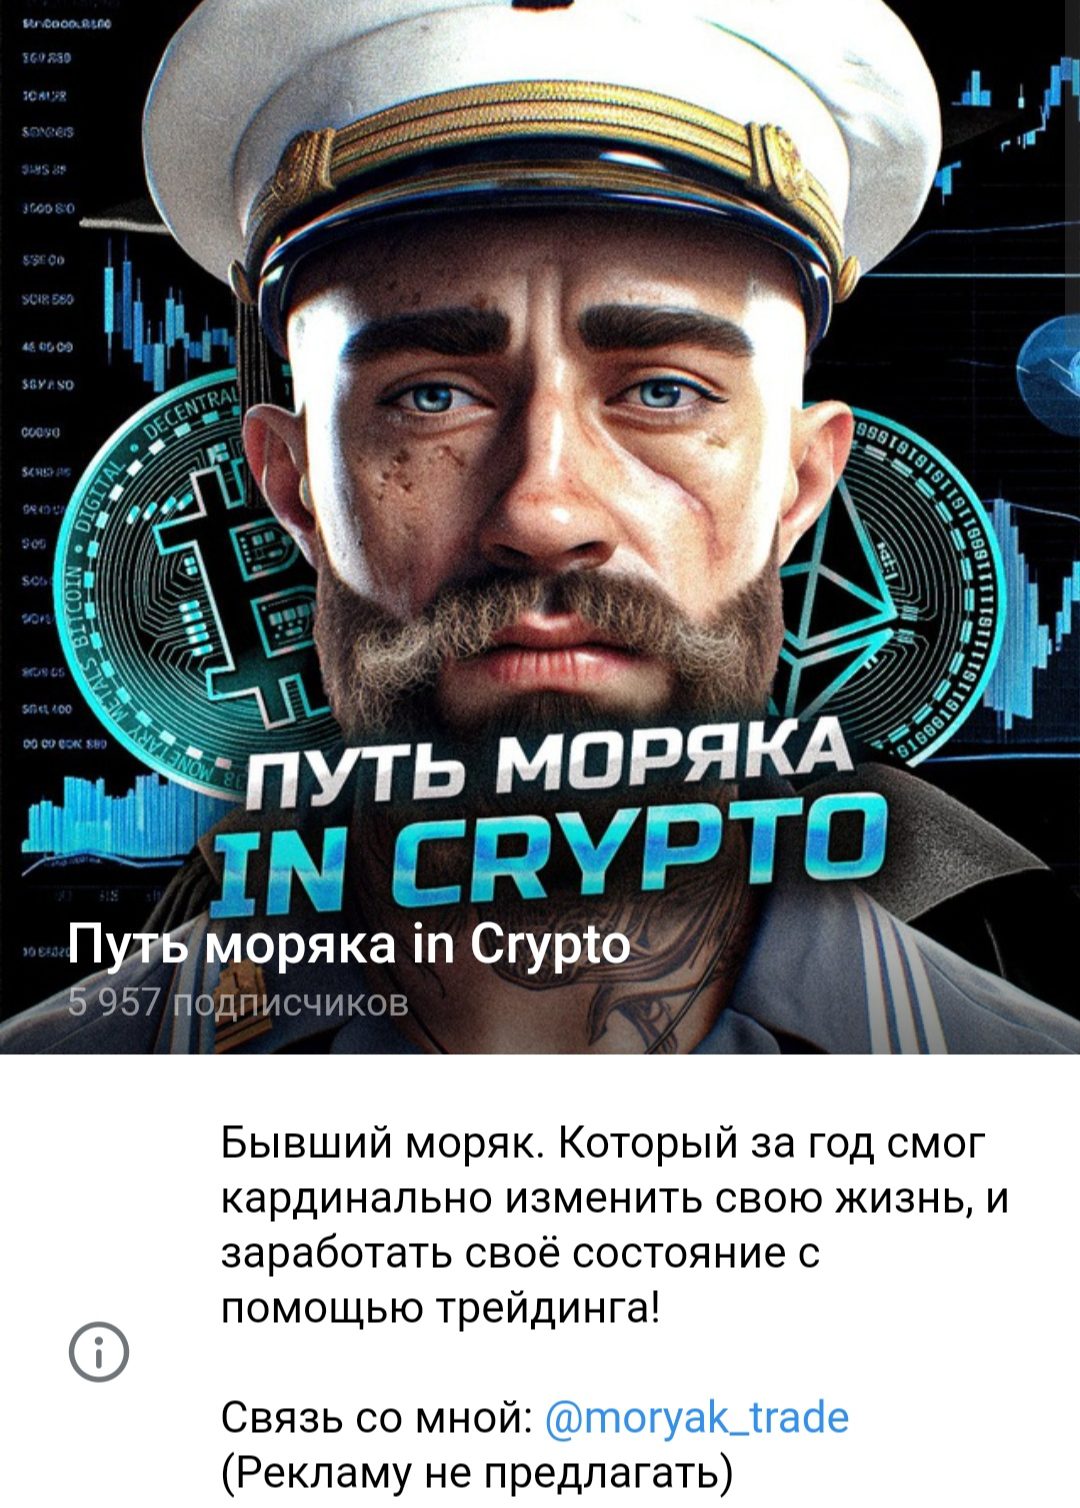 Путь моряка in Crypto телеграмм